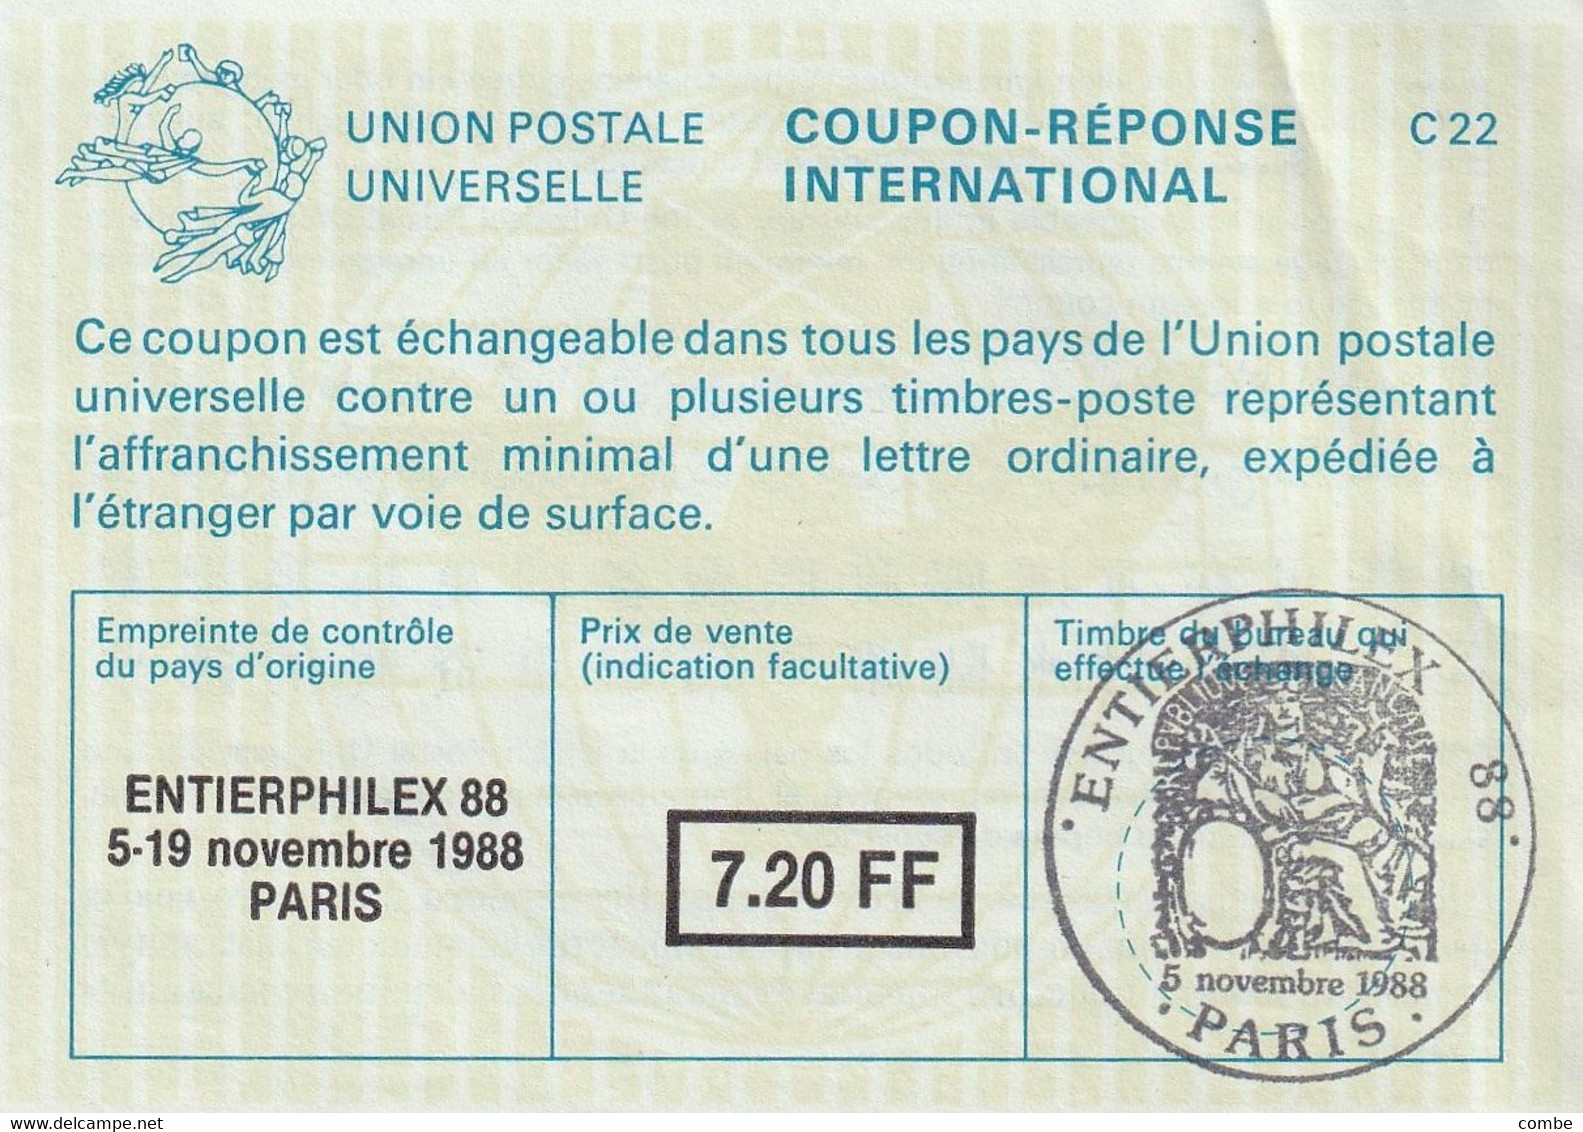 COUPON-REPONSE INTERNATIONAL. INTERNATIONAL REPLY. ENTIERPHILEX 88 PARIS. 7.20FF - Reply Coupons